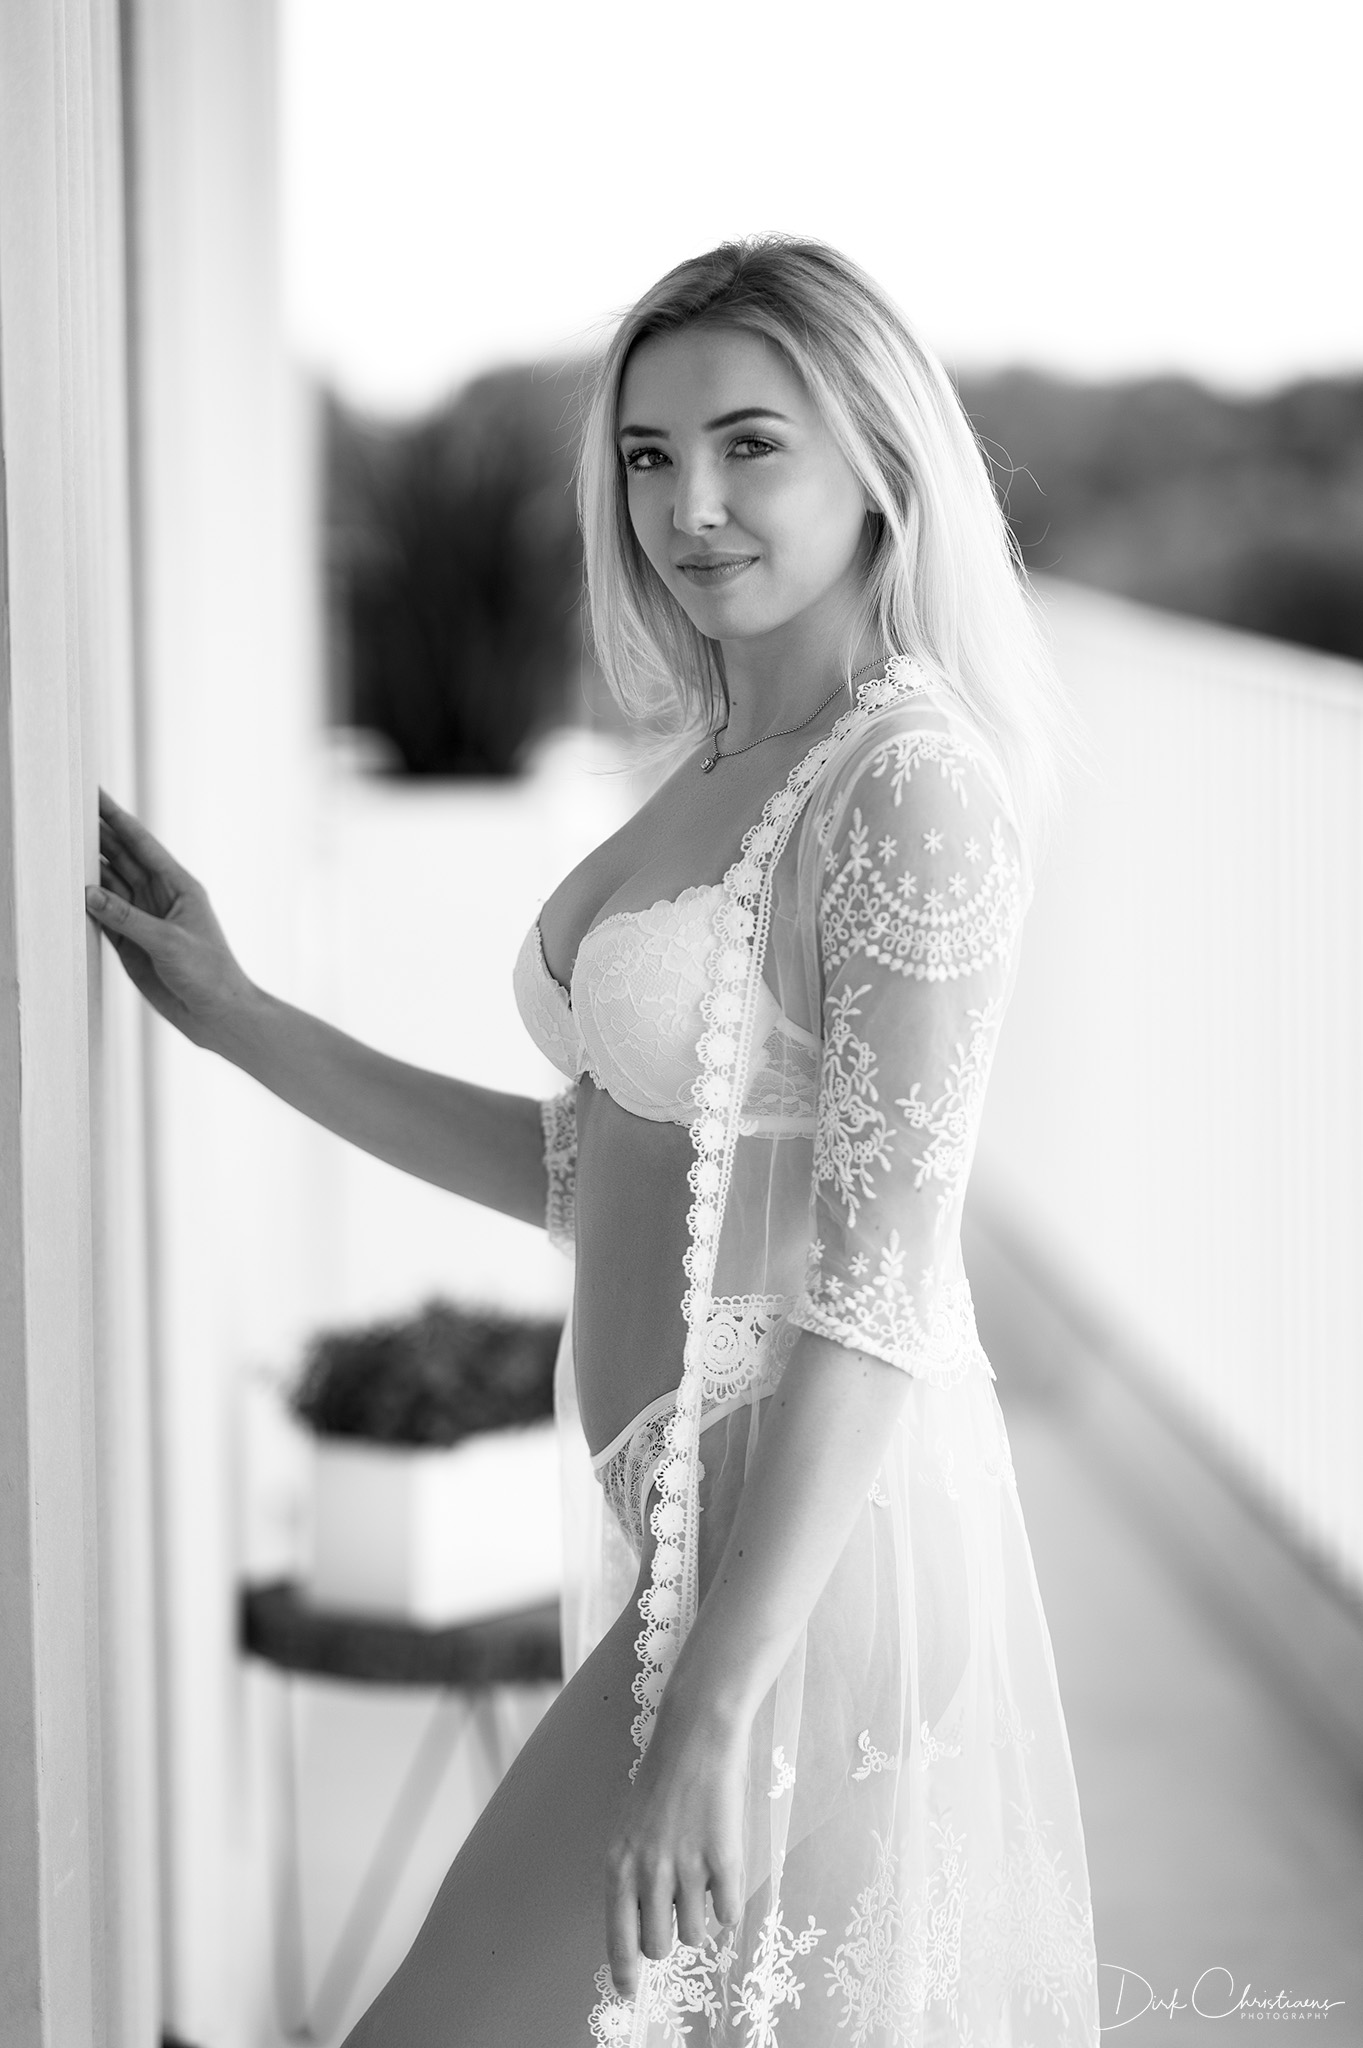 Emilie Van Ooteghem, model from Belgium at a boudoir photoshoot